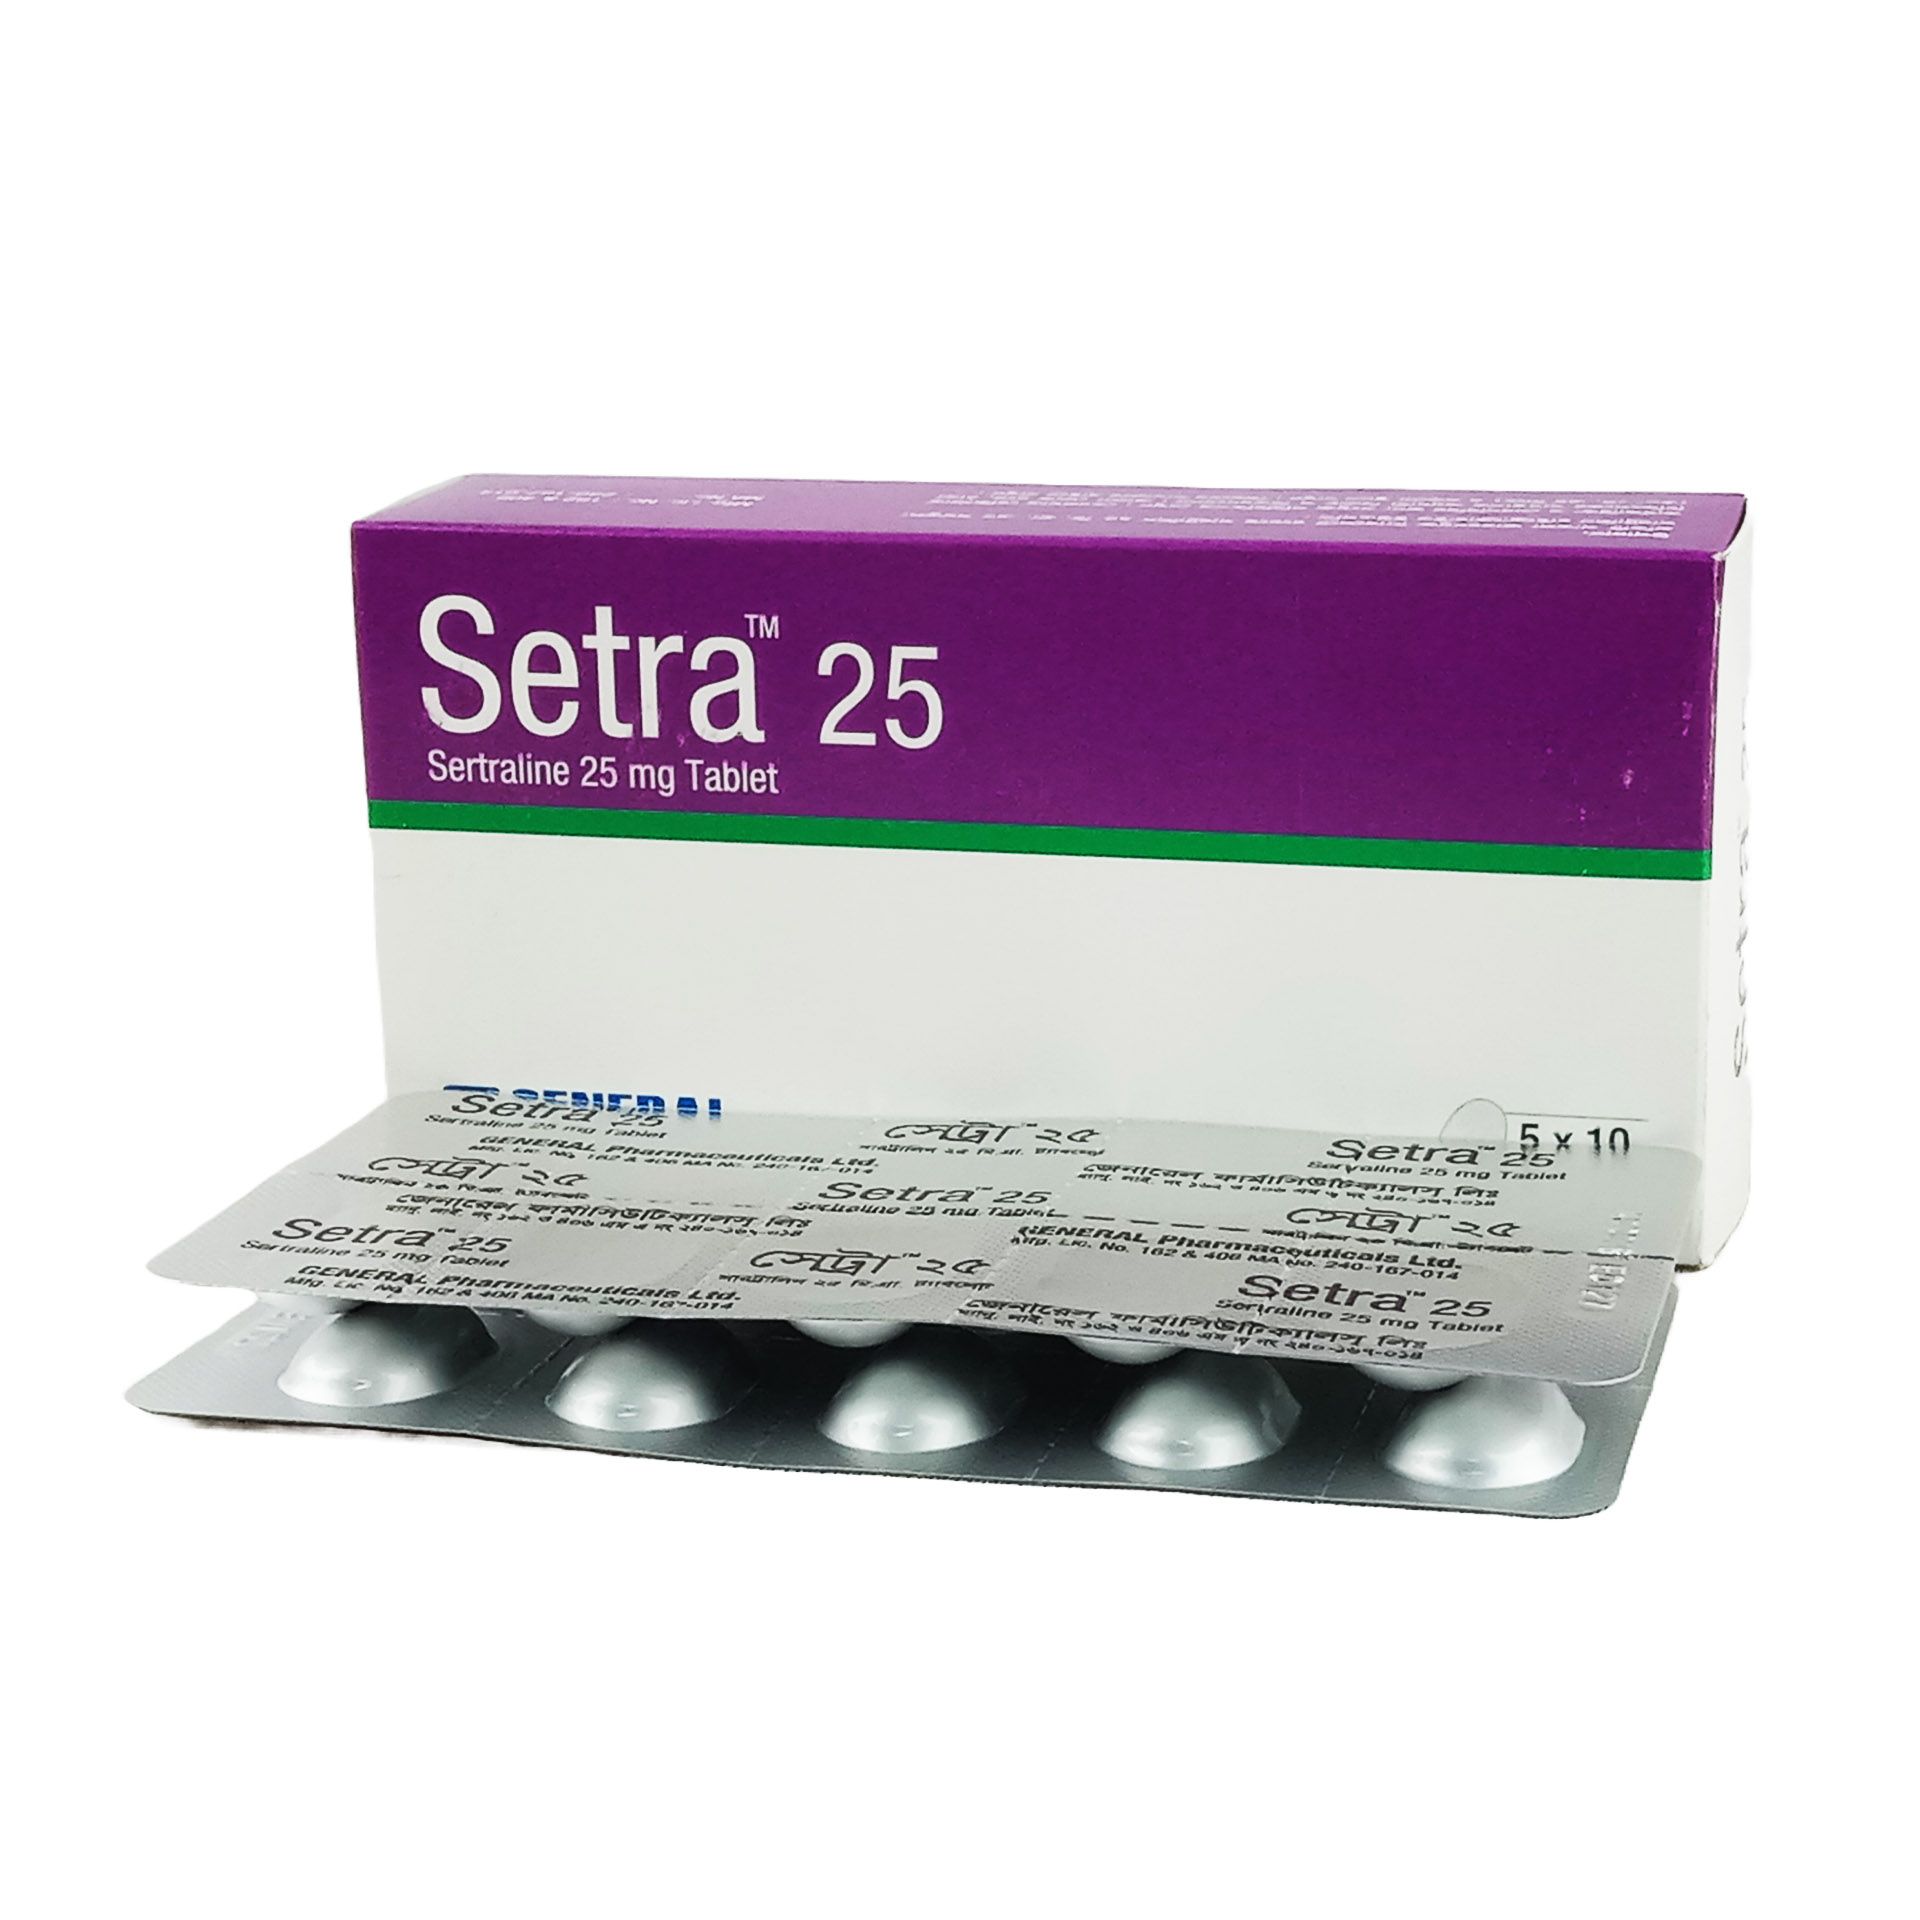 Setra 25mg Tablet